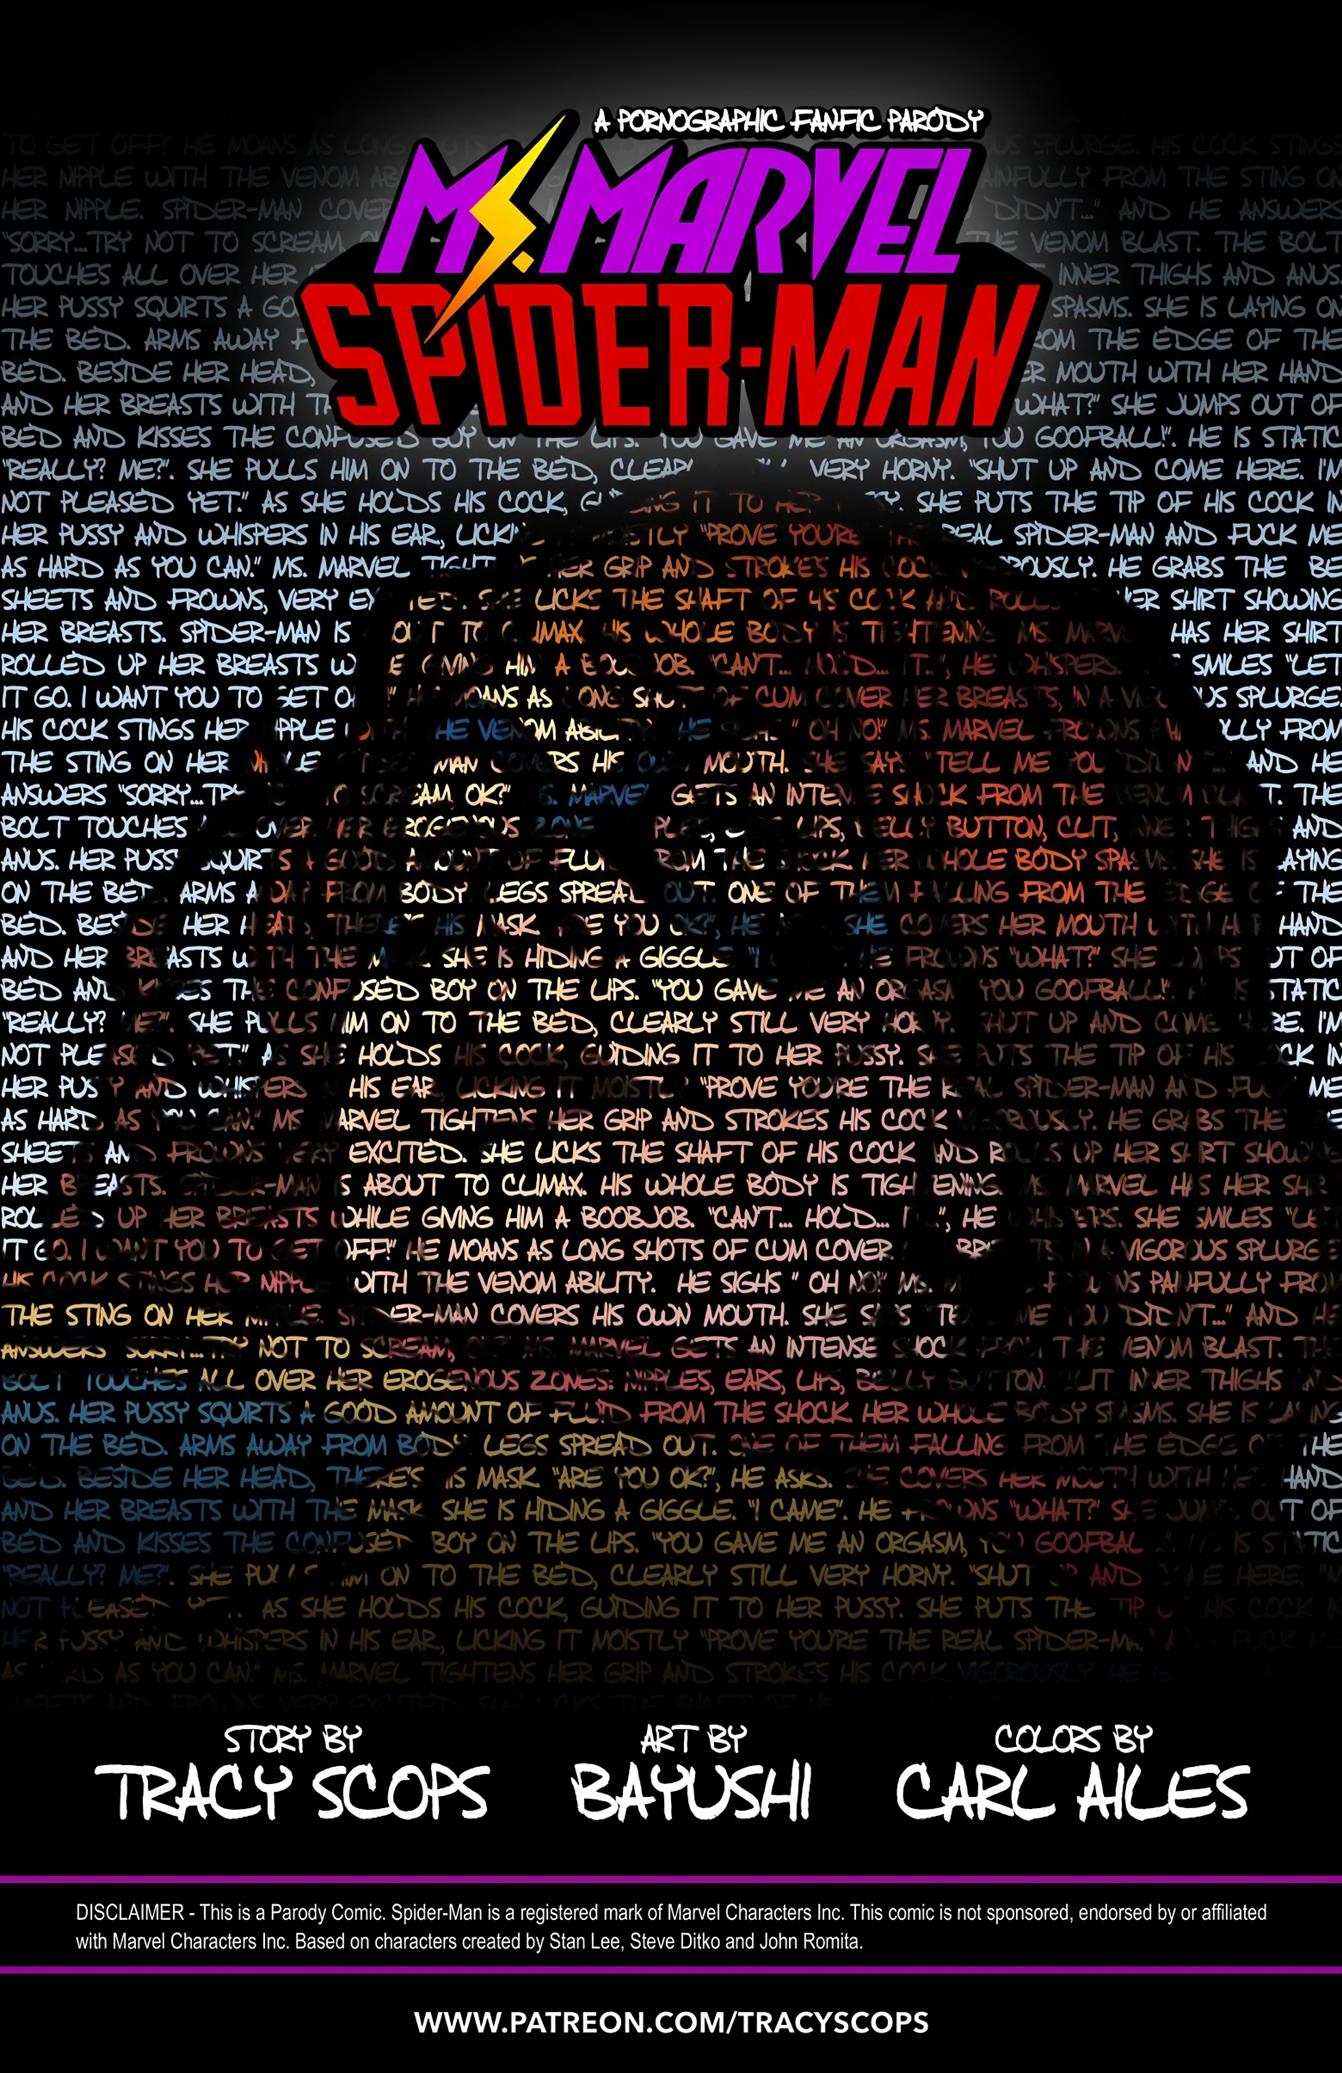 Ms.Marvel/Spiderman 1 [Tracy Scops]